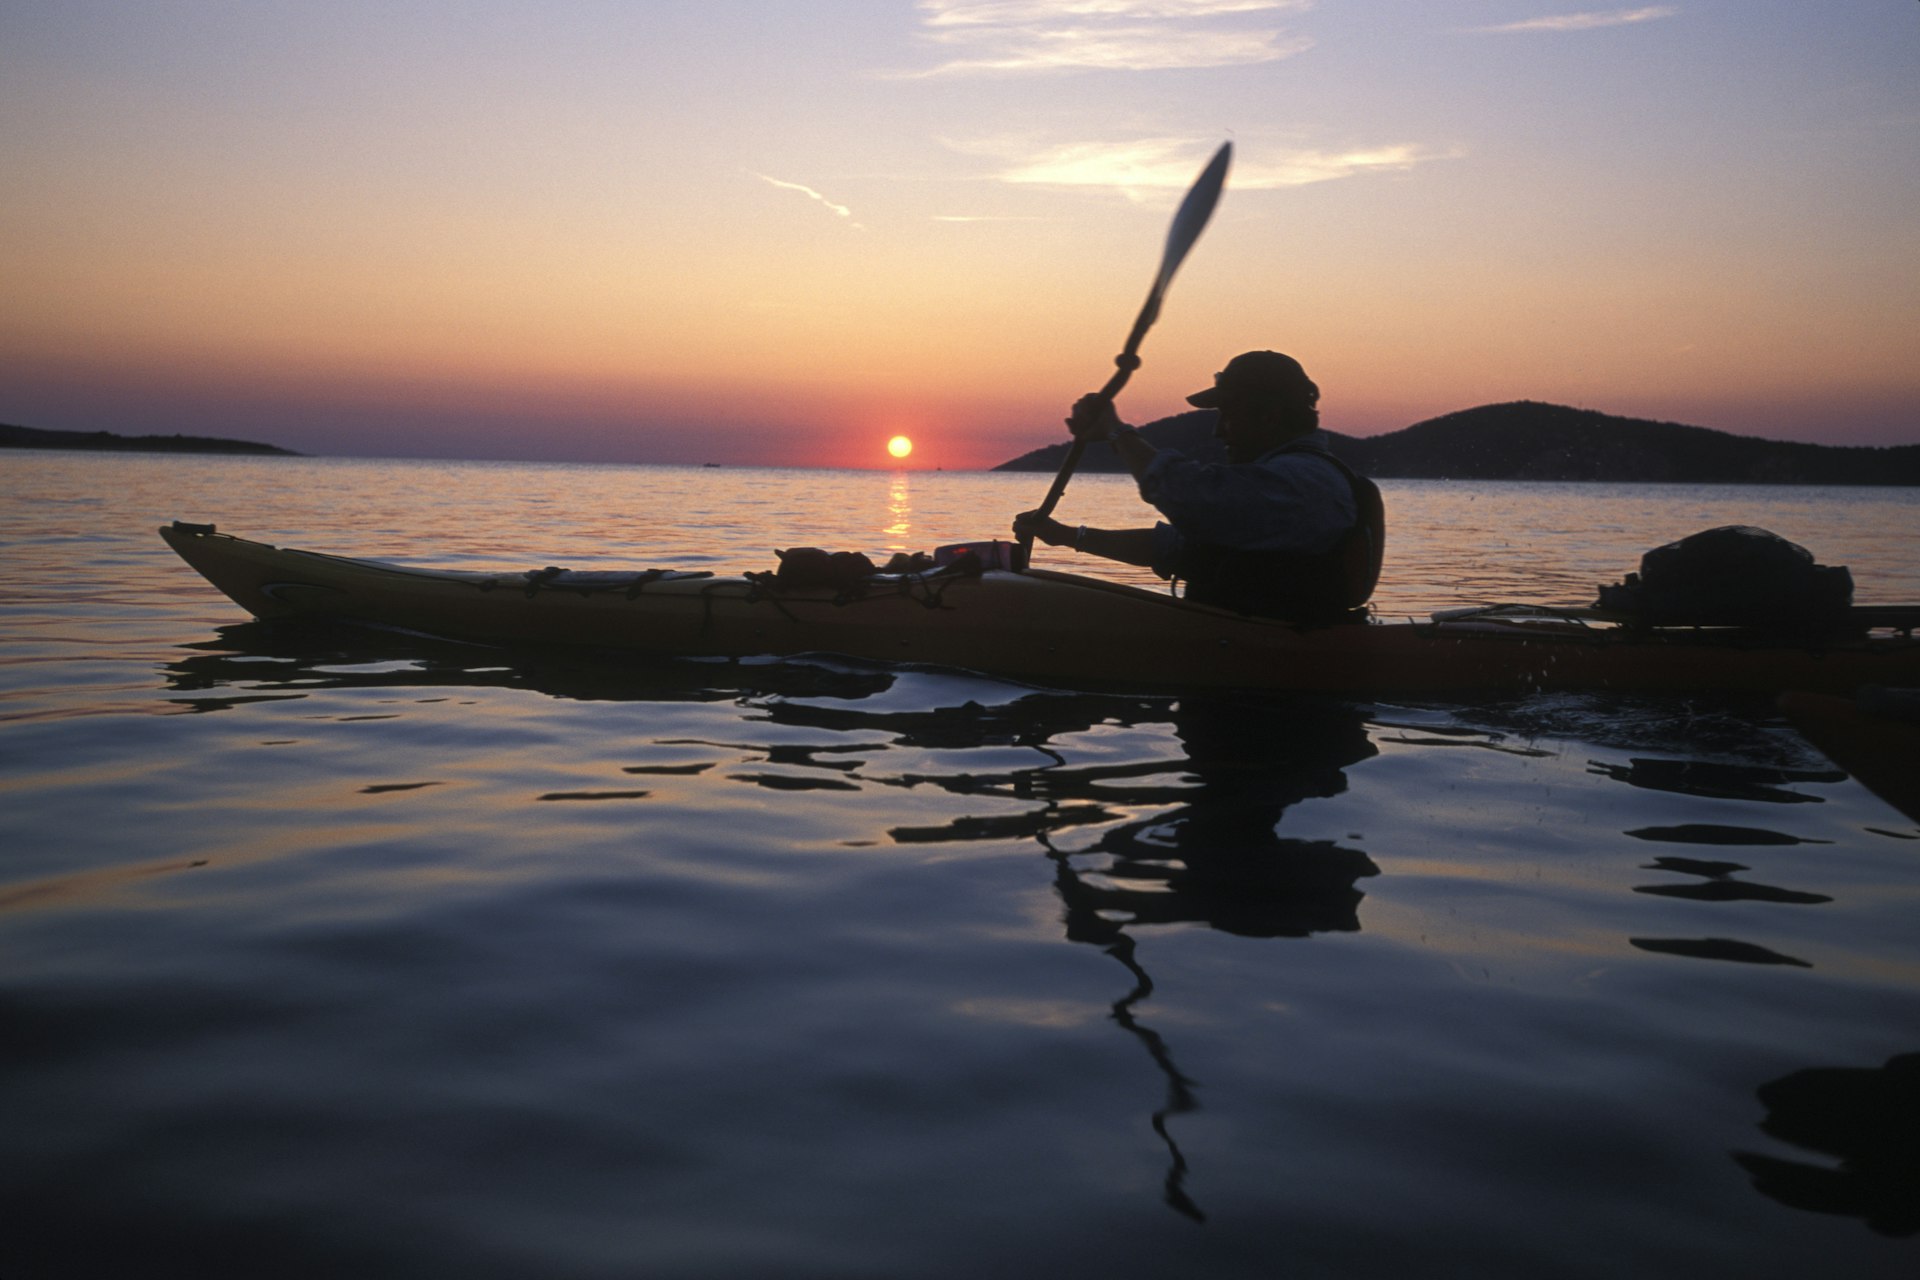 Kayaking at sunset in Croatia